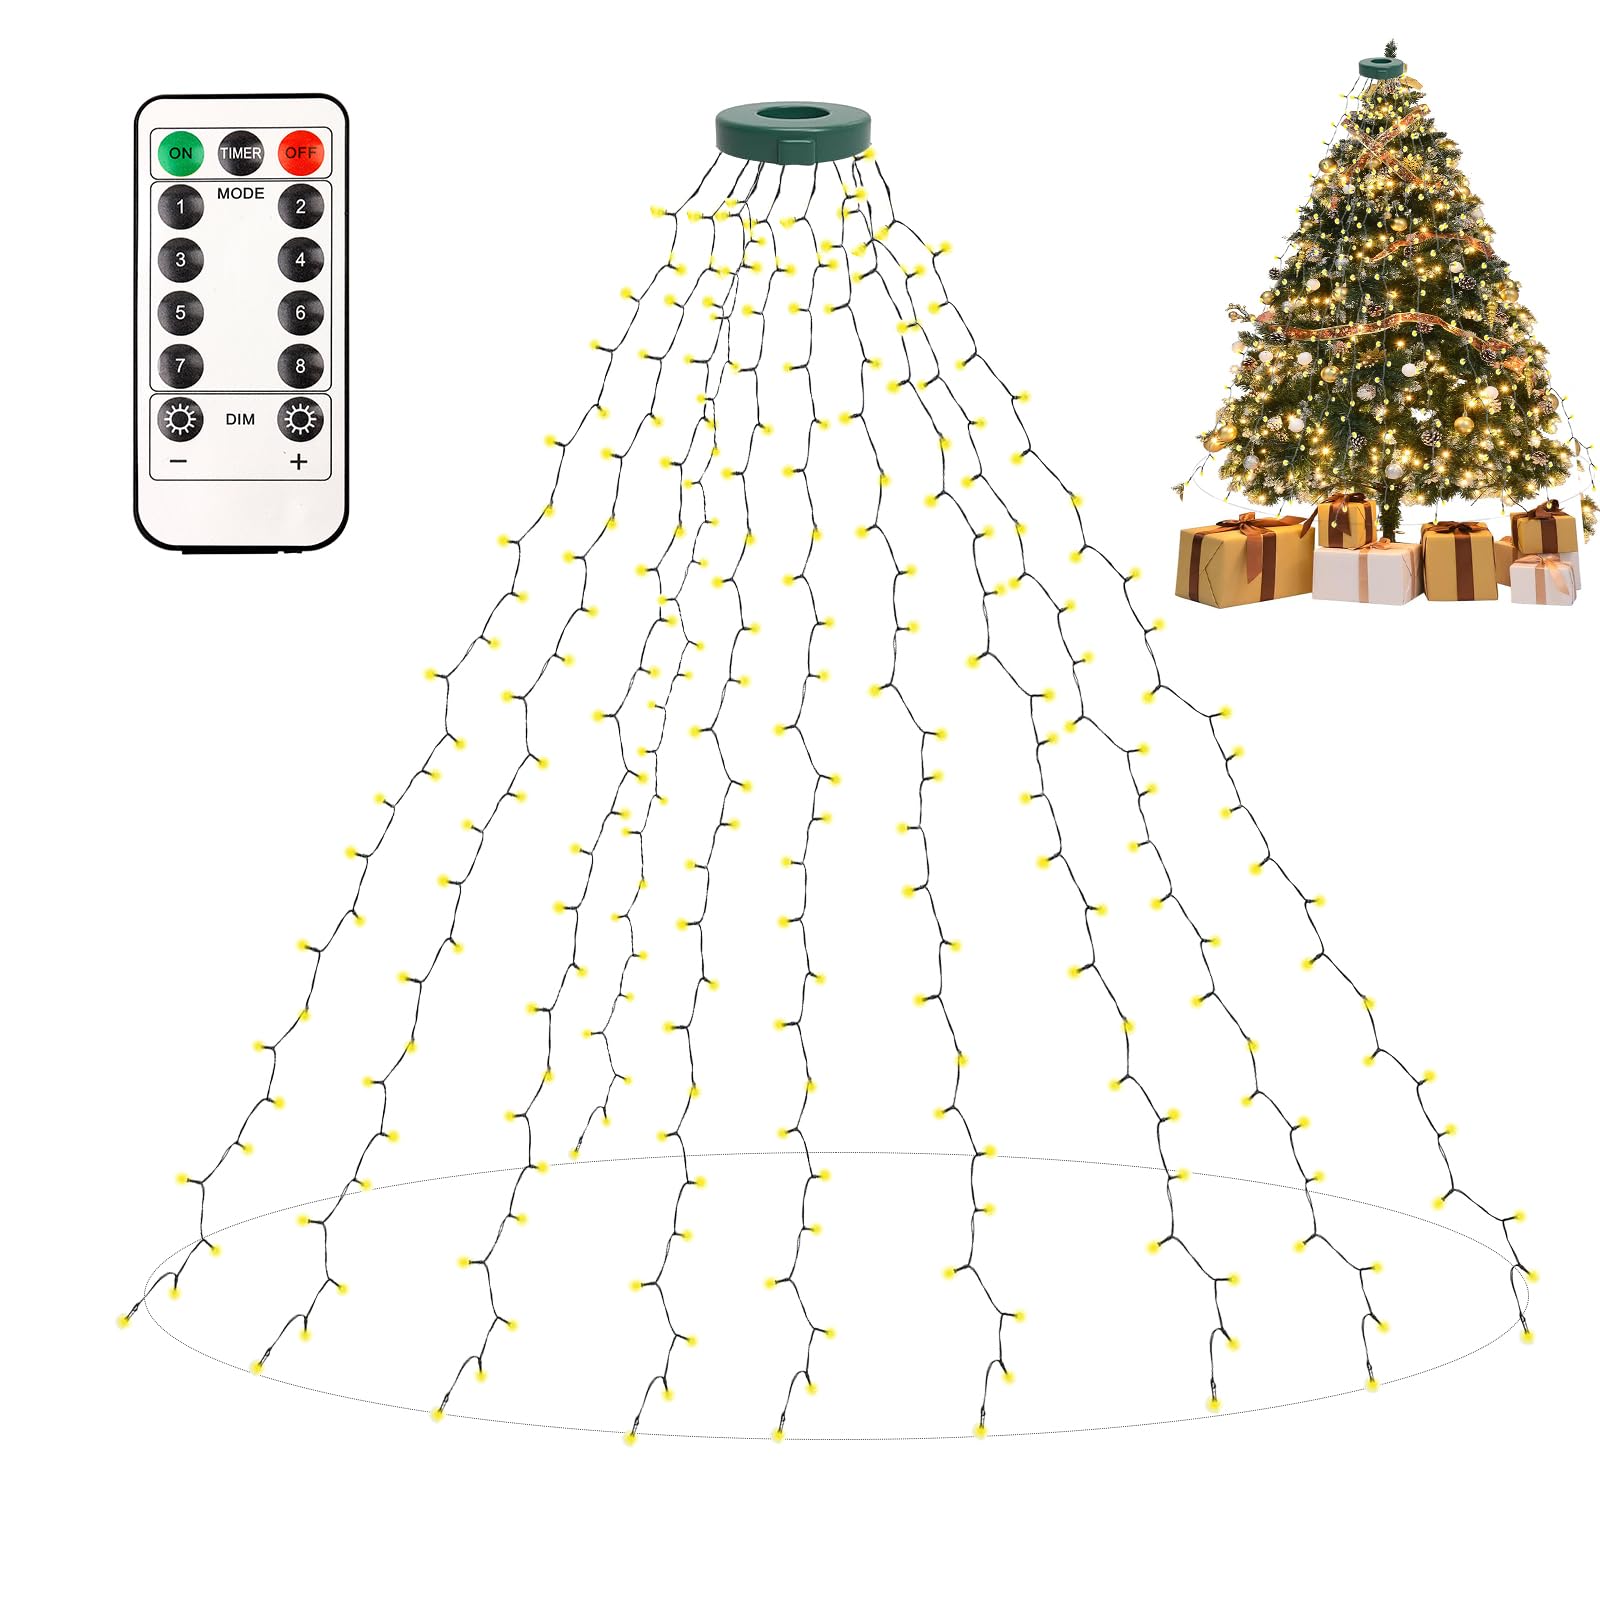 Magnifique Guirlandes lumineuses, Guirlandes lumineuses pour arbre de Noël, Guirlandes lumineuses pour arbre de Noël avec 200 LED, Guirlandes lumineuses pour arbre de Noël 2M avec huit modèles (Blanc chaud) tMUiUvdHv Vente chaude